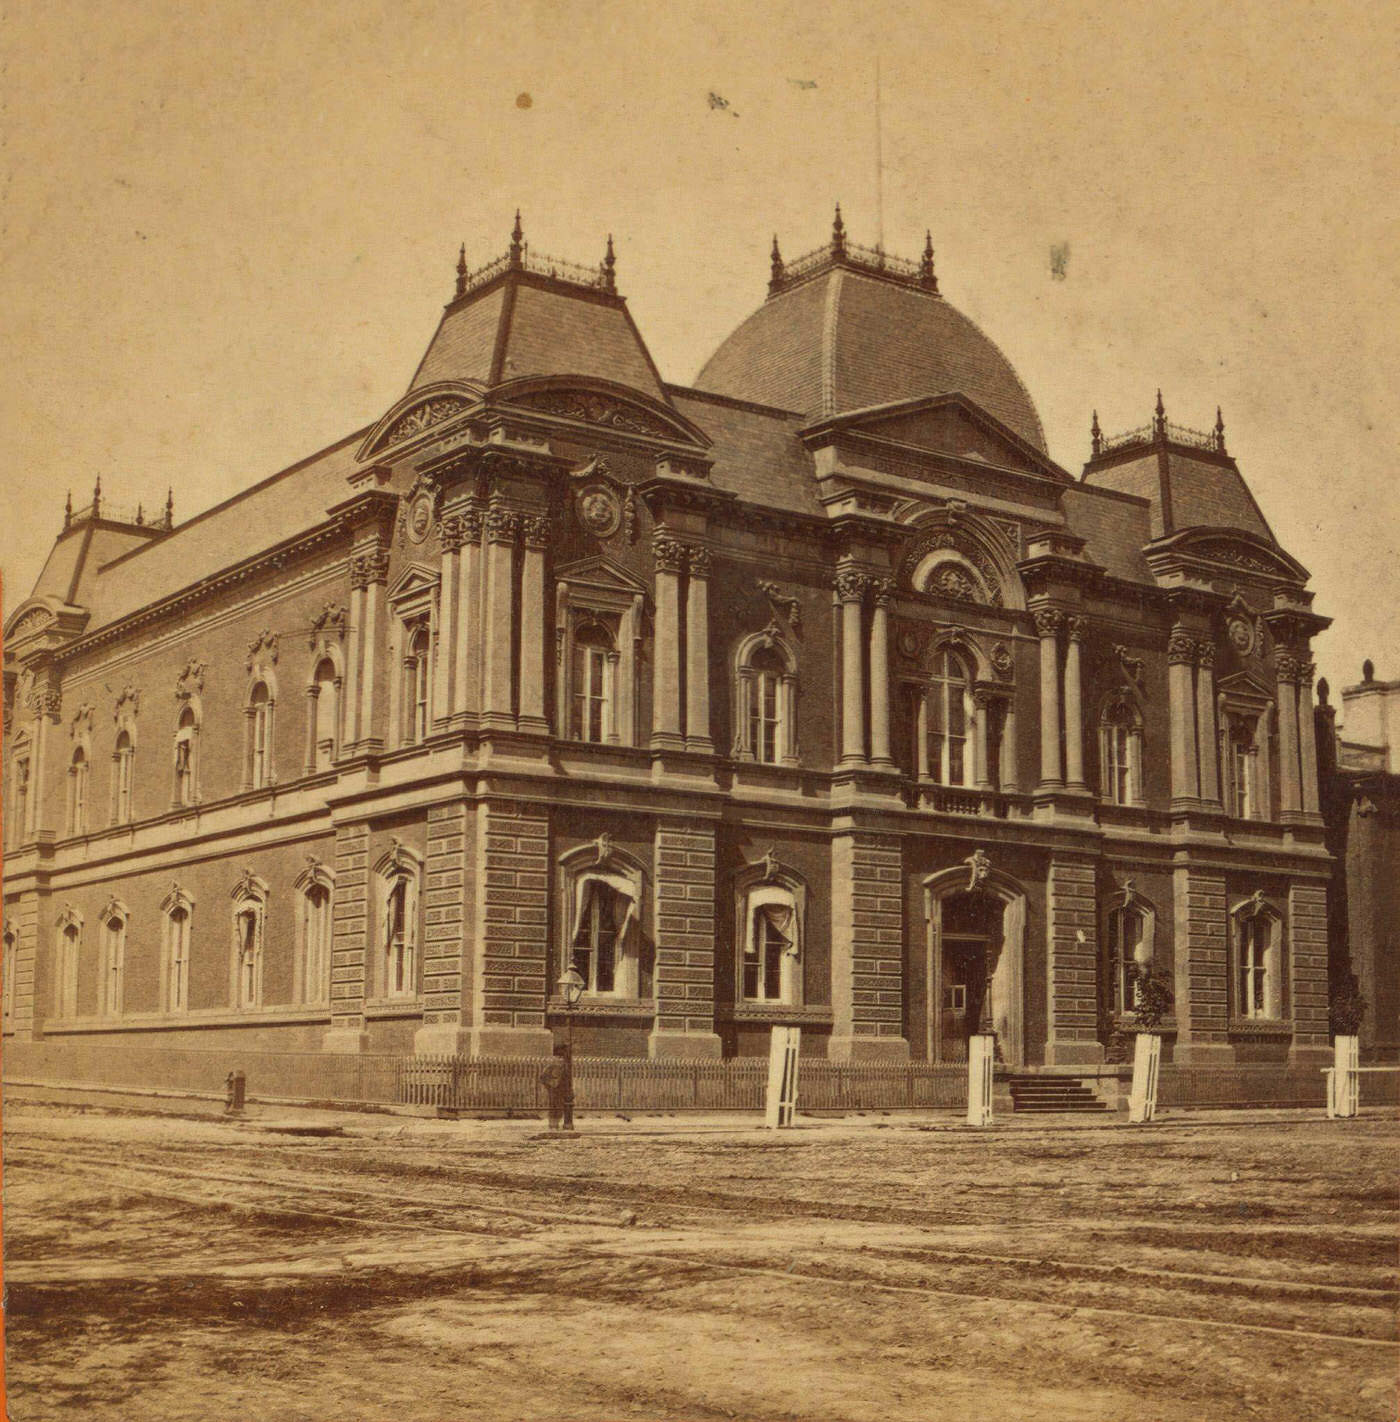 Corcoran Art Building Penn. Avenue., Washington, D.C., 1864